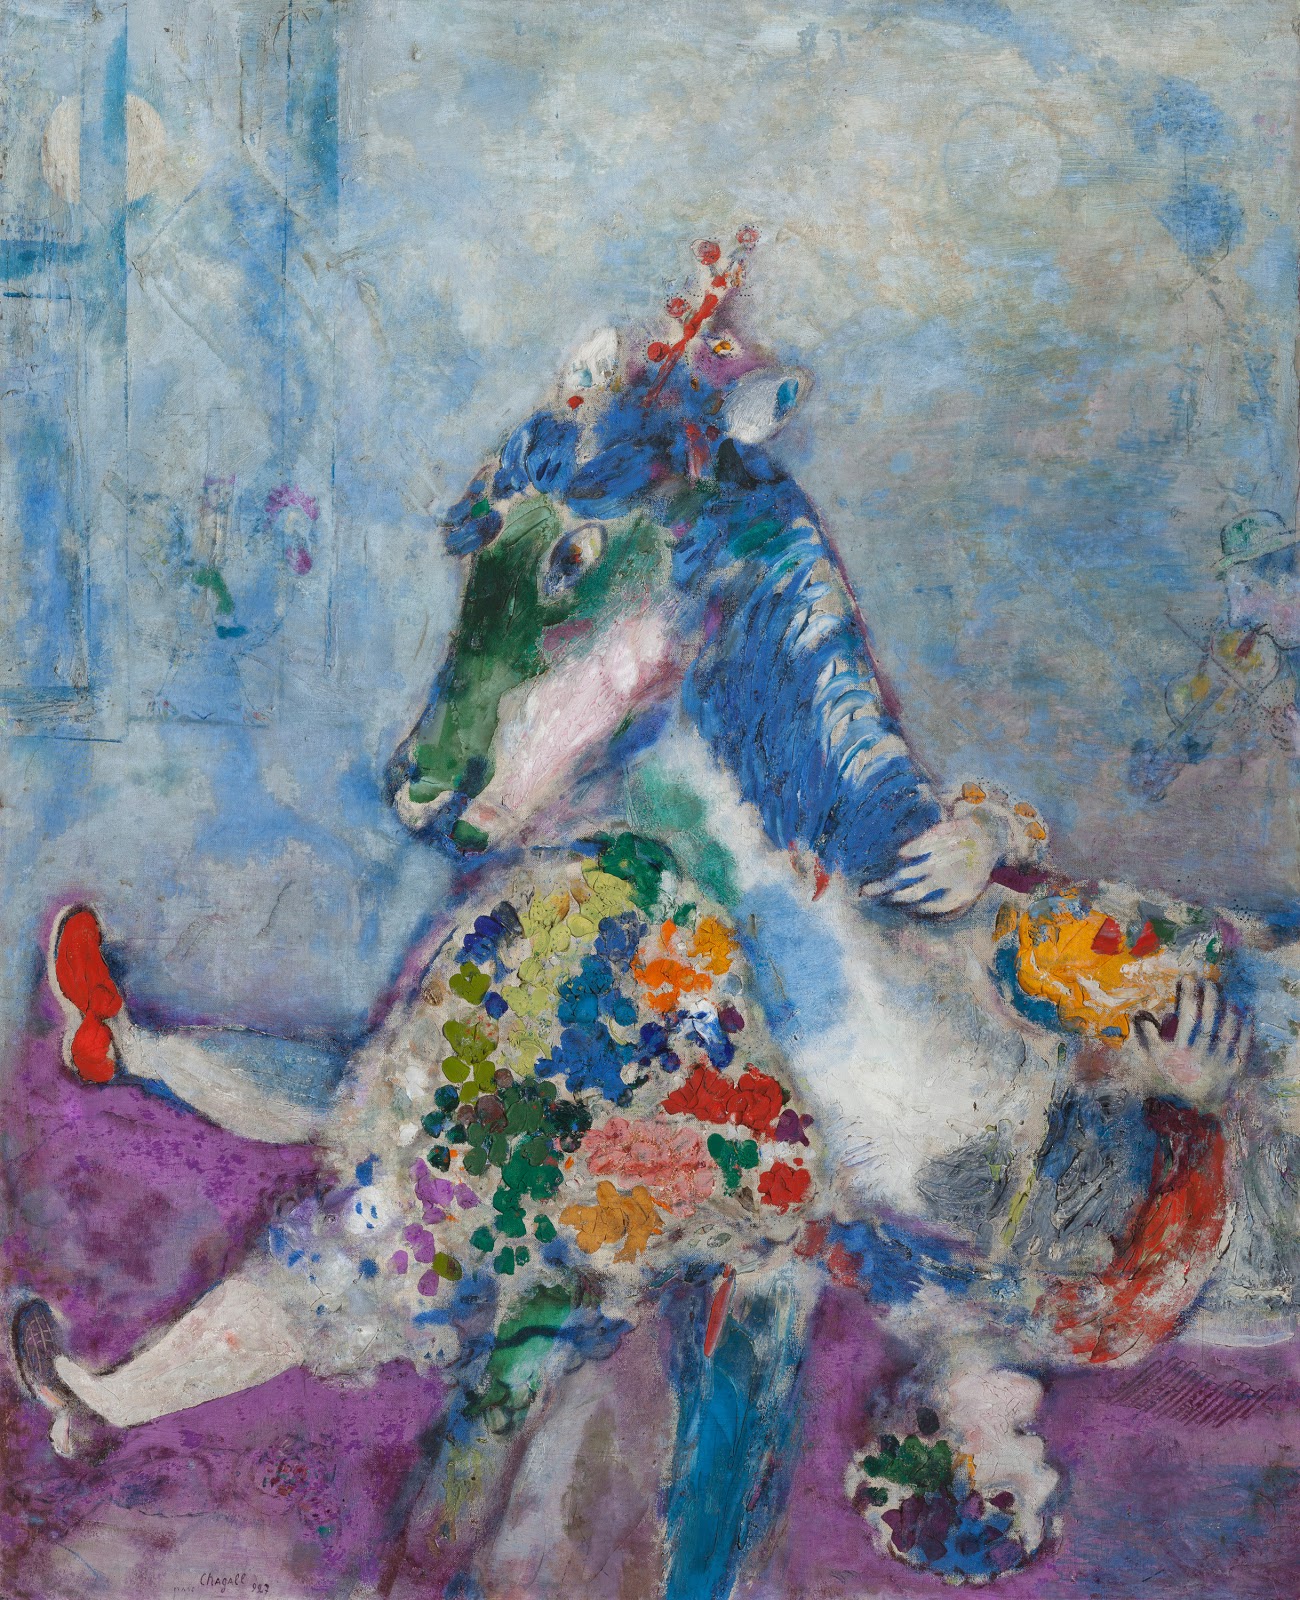 Marc+Chagall-1887-1985 (58).jpg